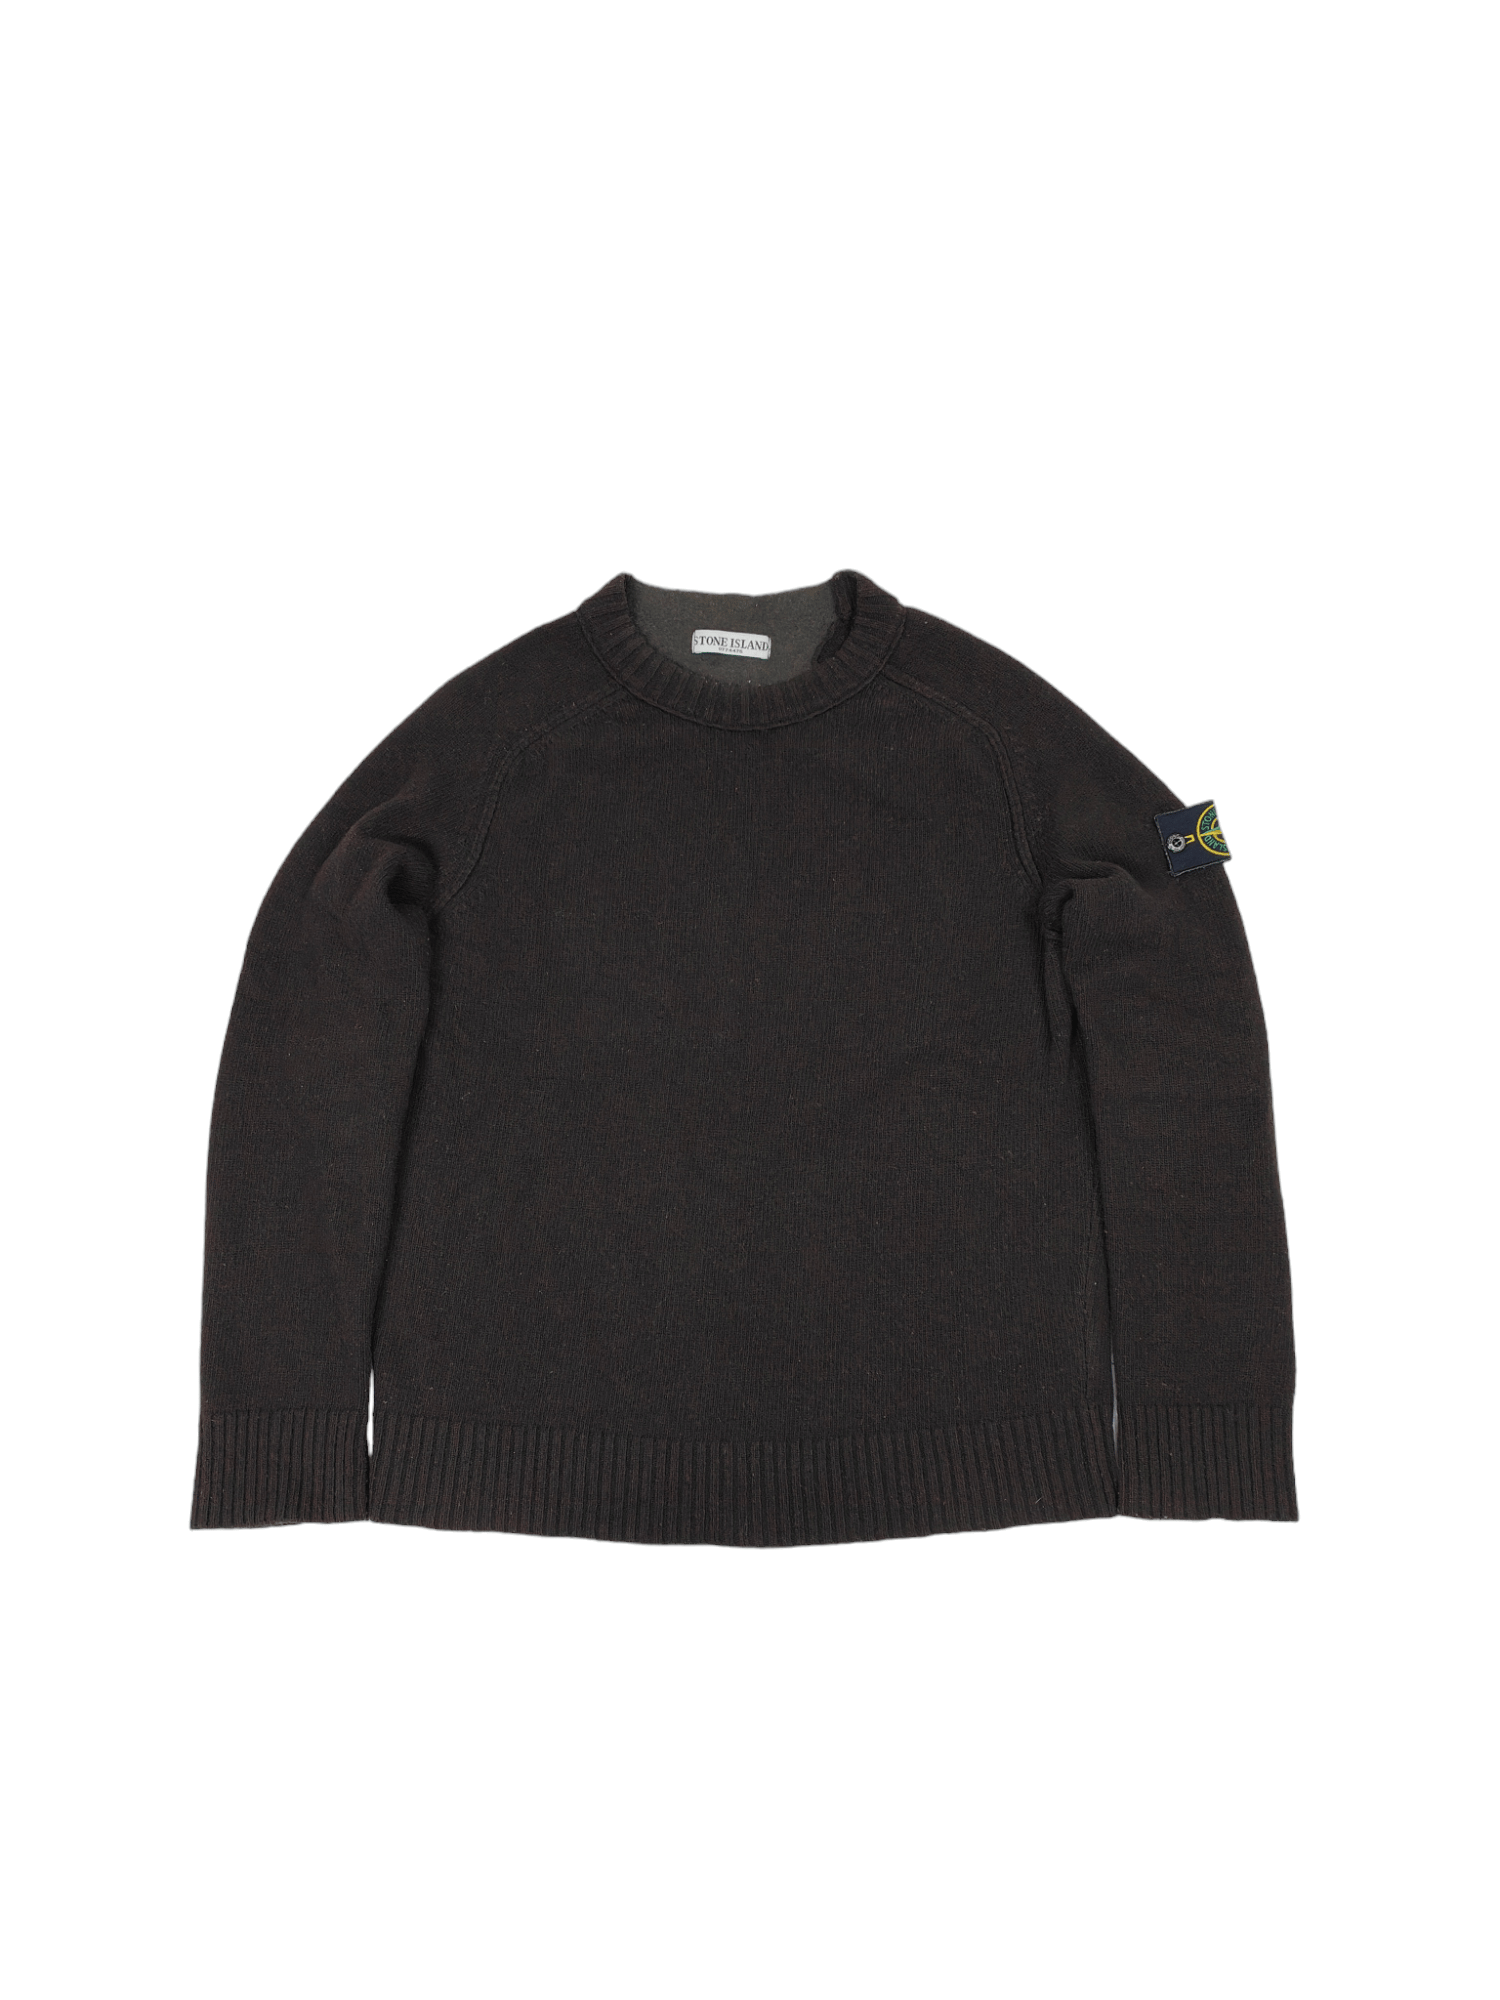 SizeLStone Island Sweater Size L